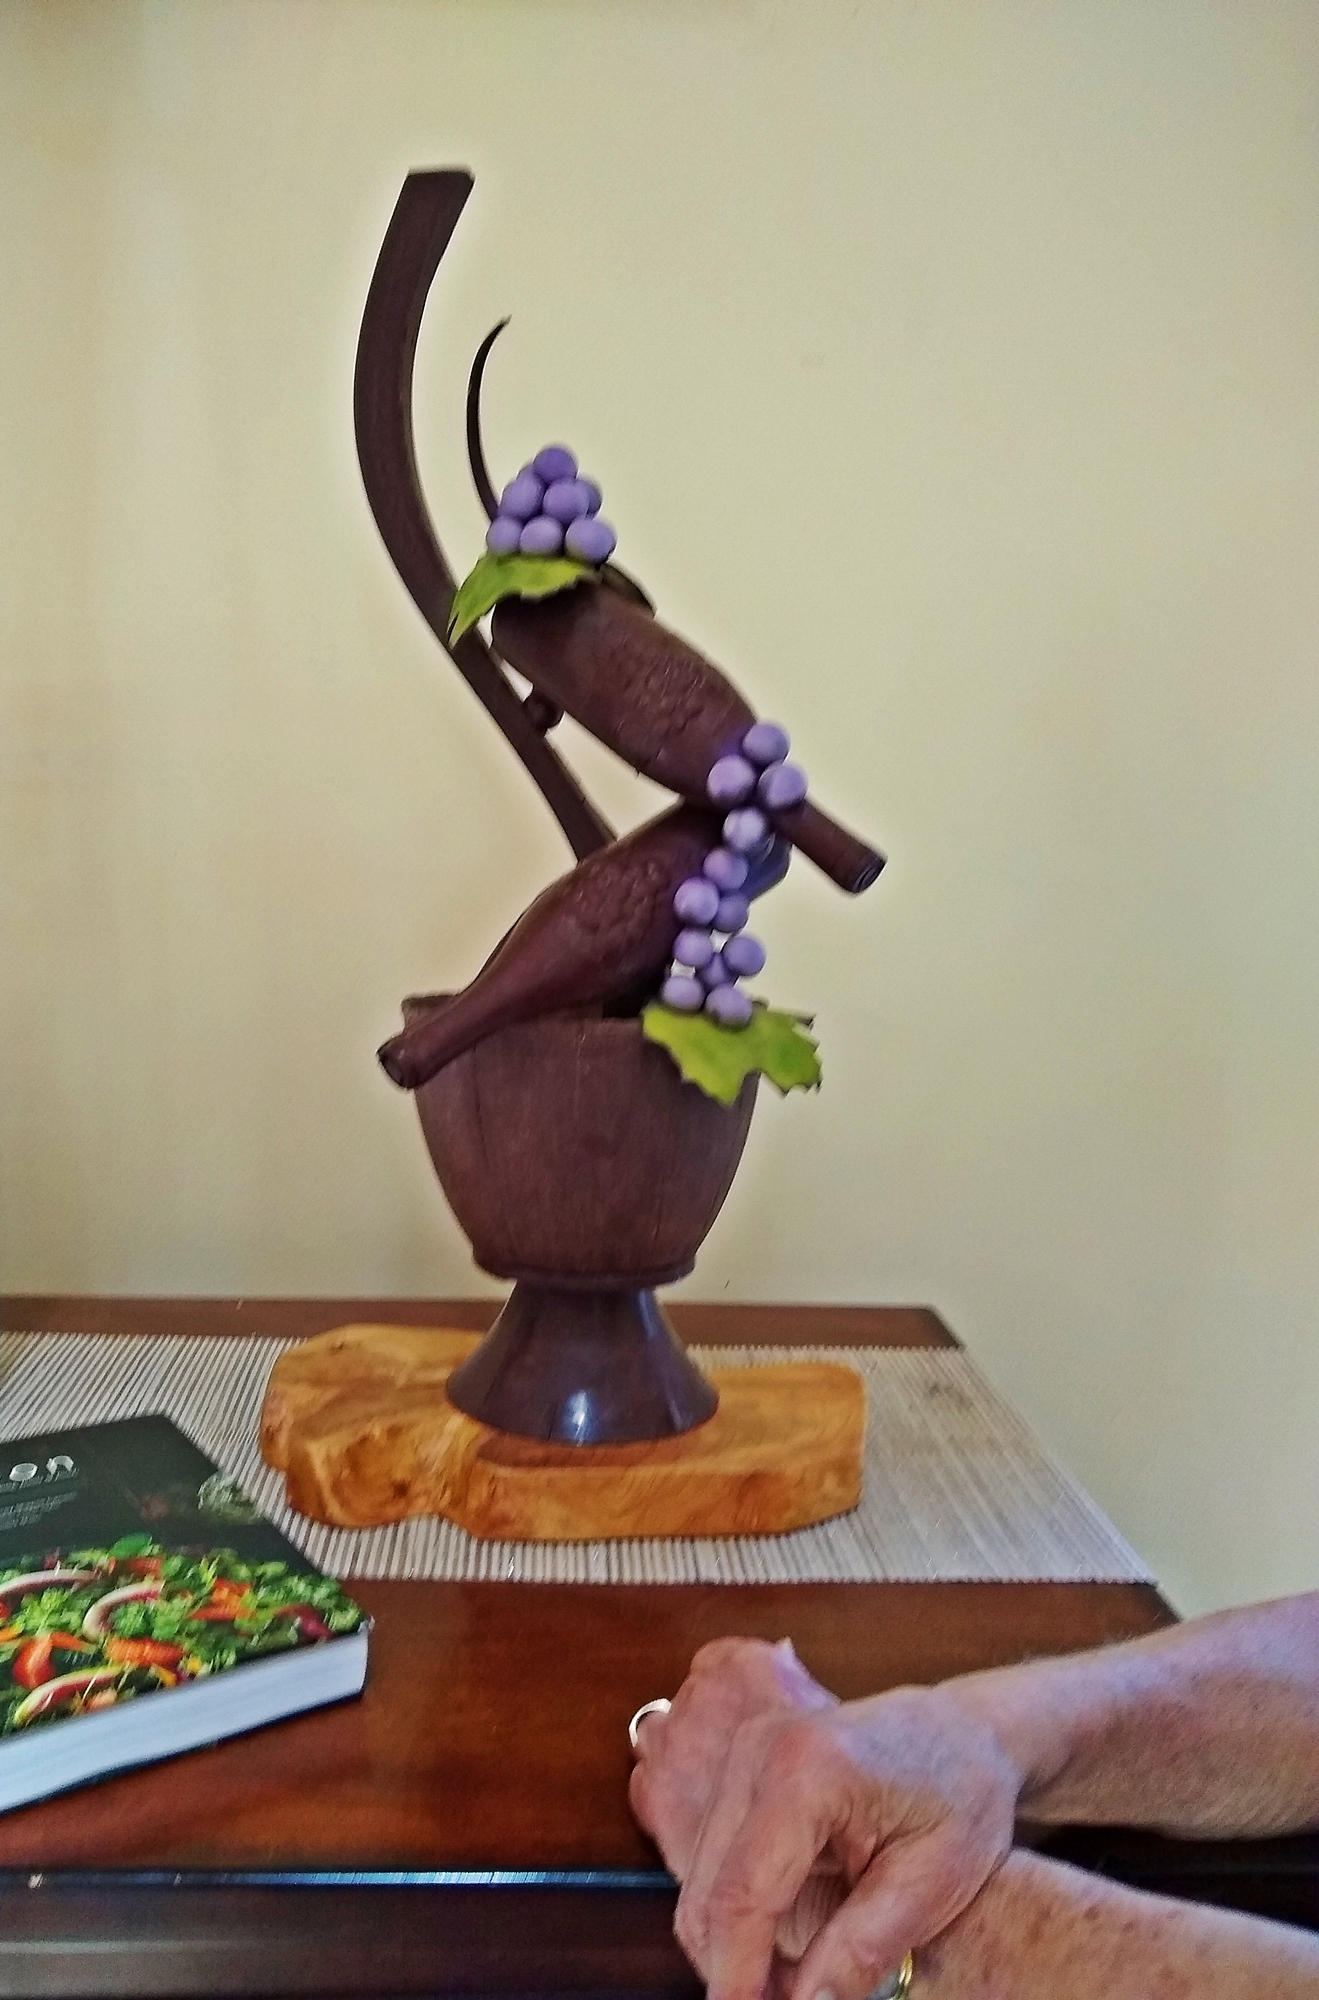 Chocolate Sculpture